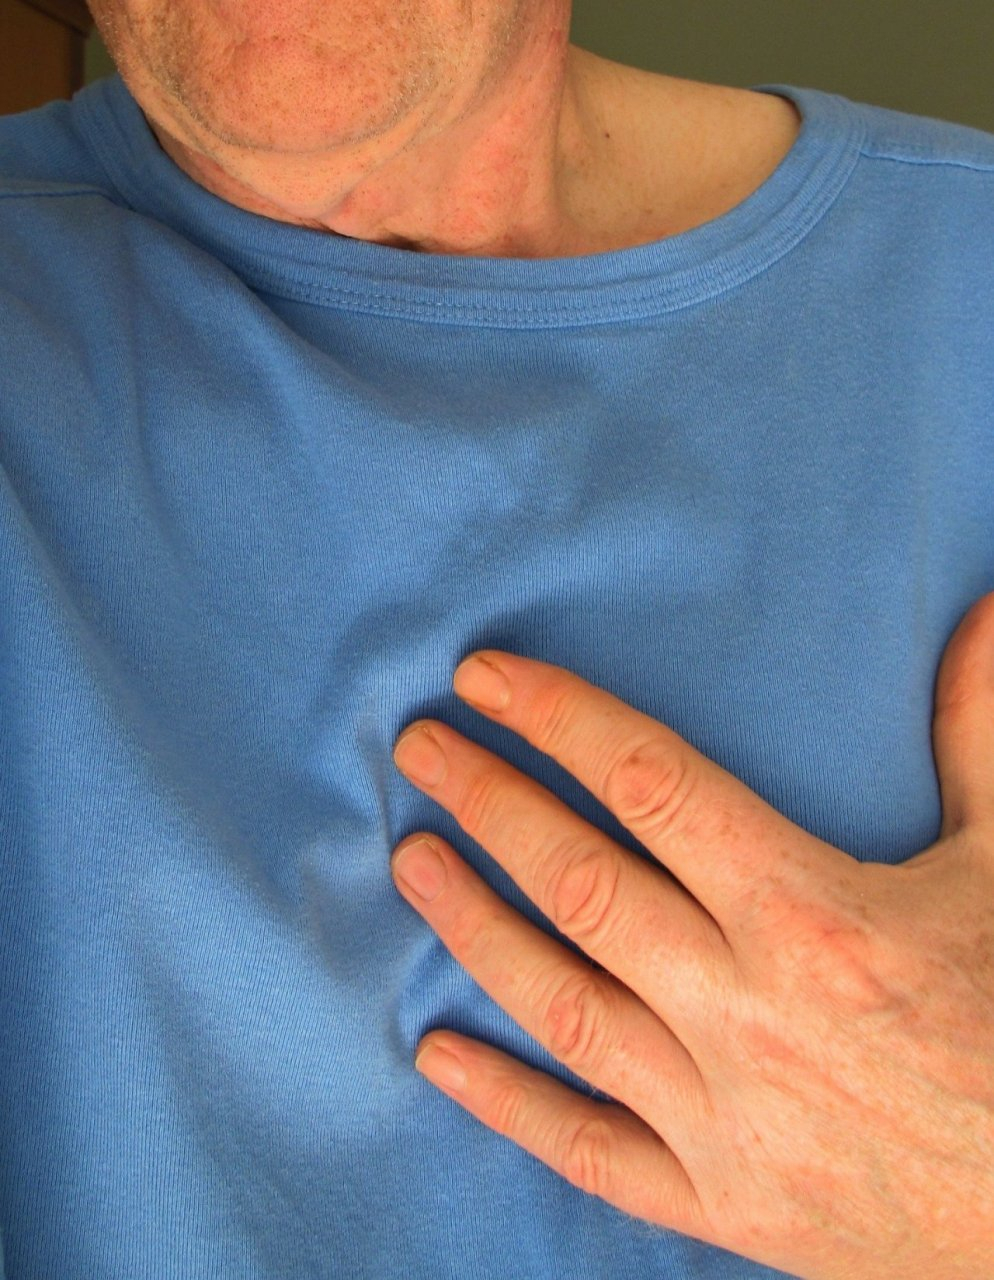 Кардиолог перечислила необычные симптомы инфаркта